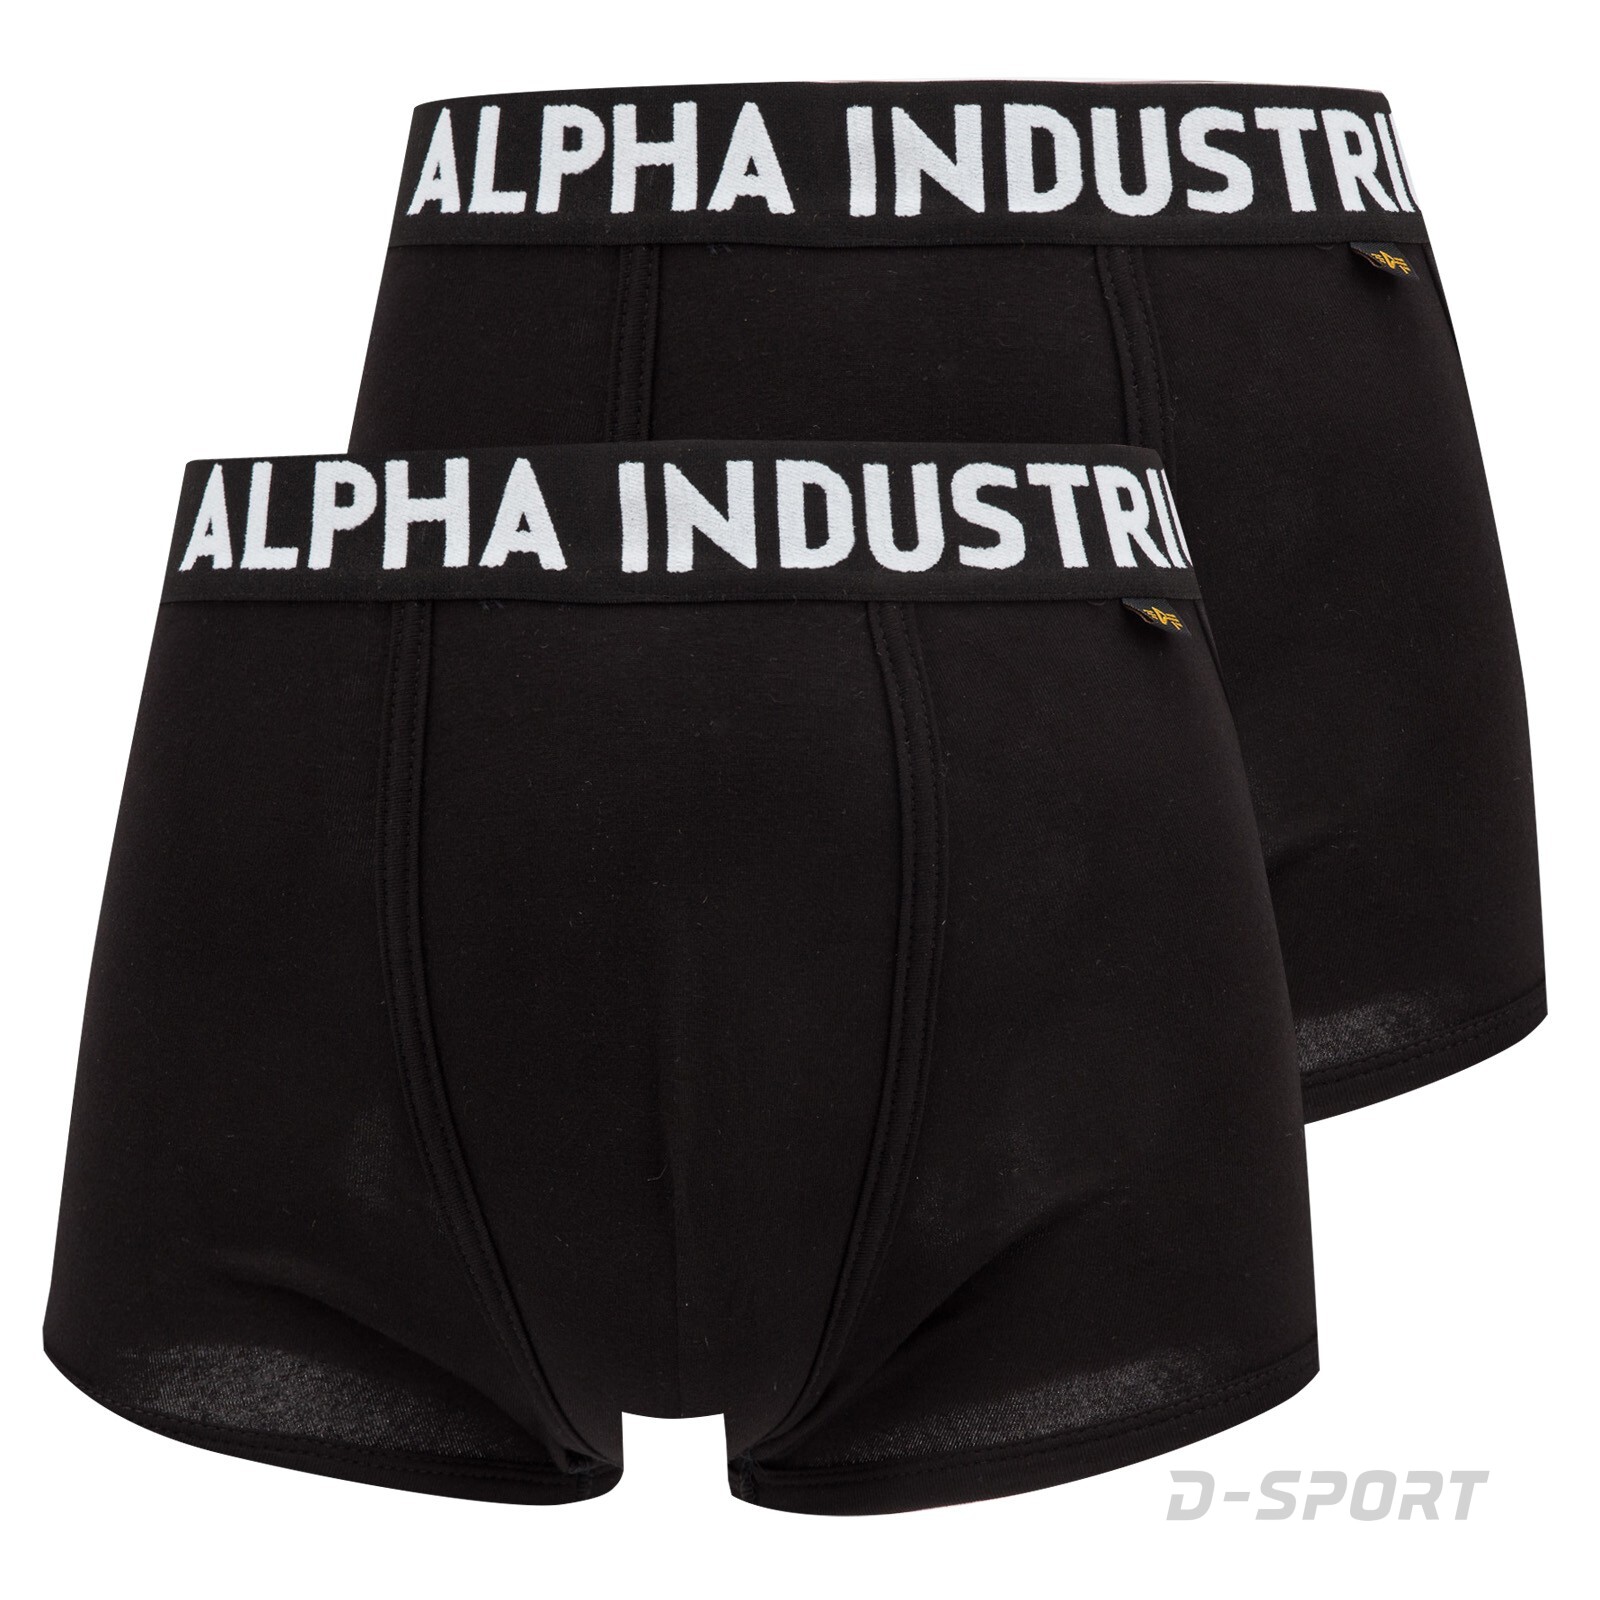 AI Tape Contrast Underwear 2 Pack